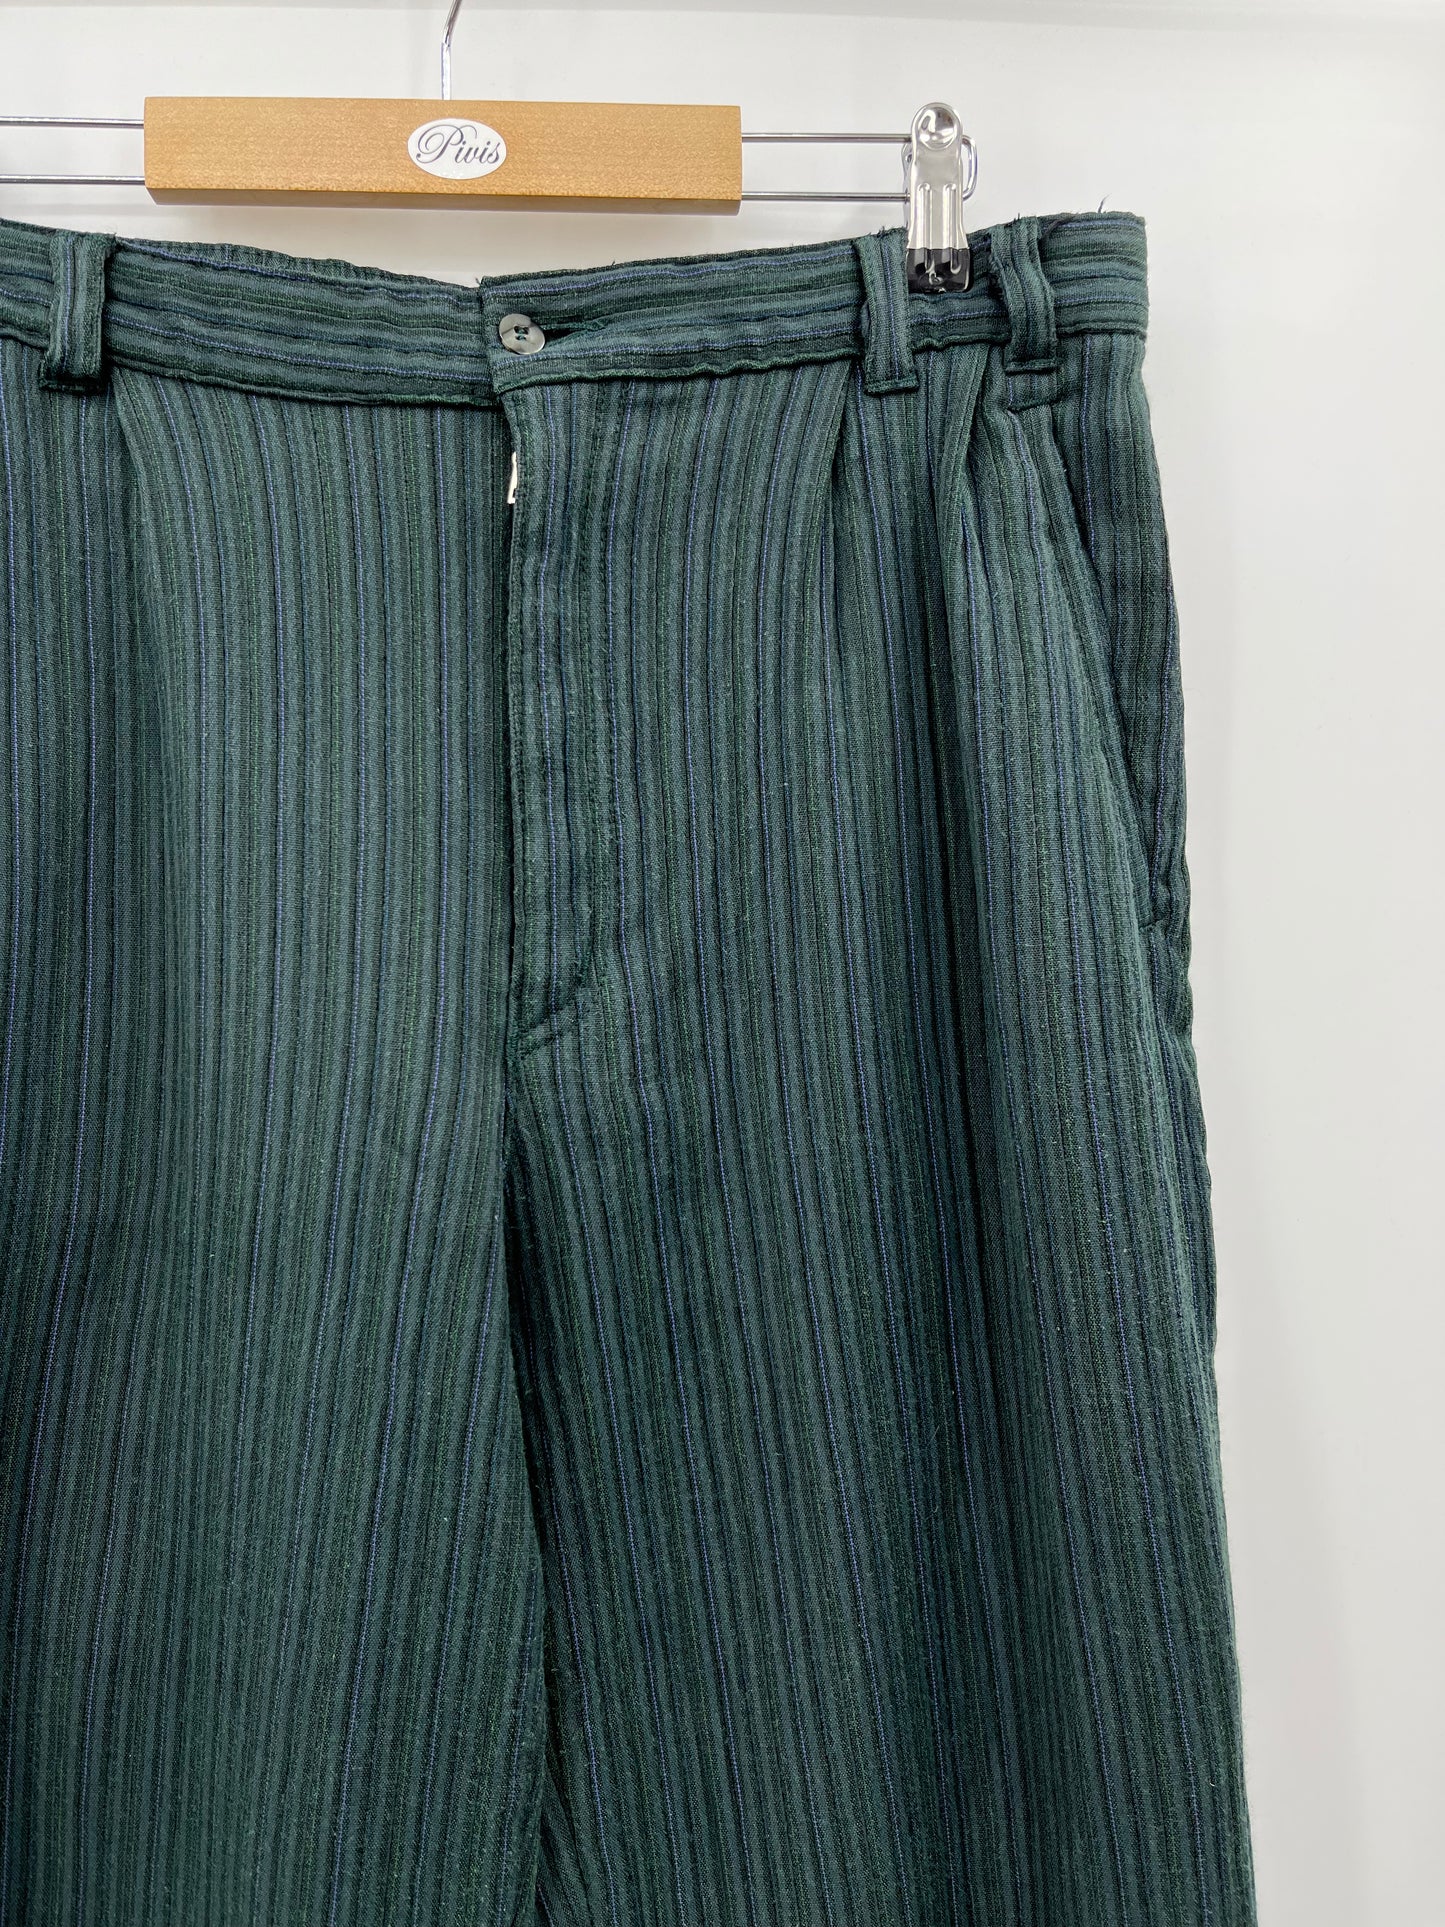 Kirroyal, miesten vihreät housut, 90-luku, vyöt.ymp. 88cm, kokoarvio M